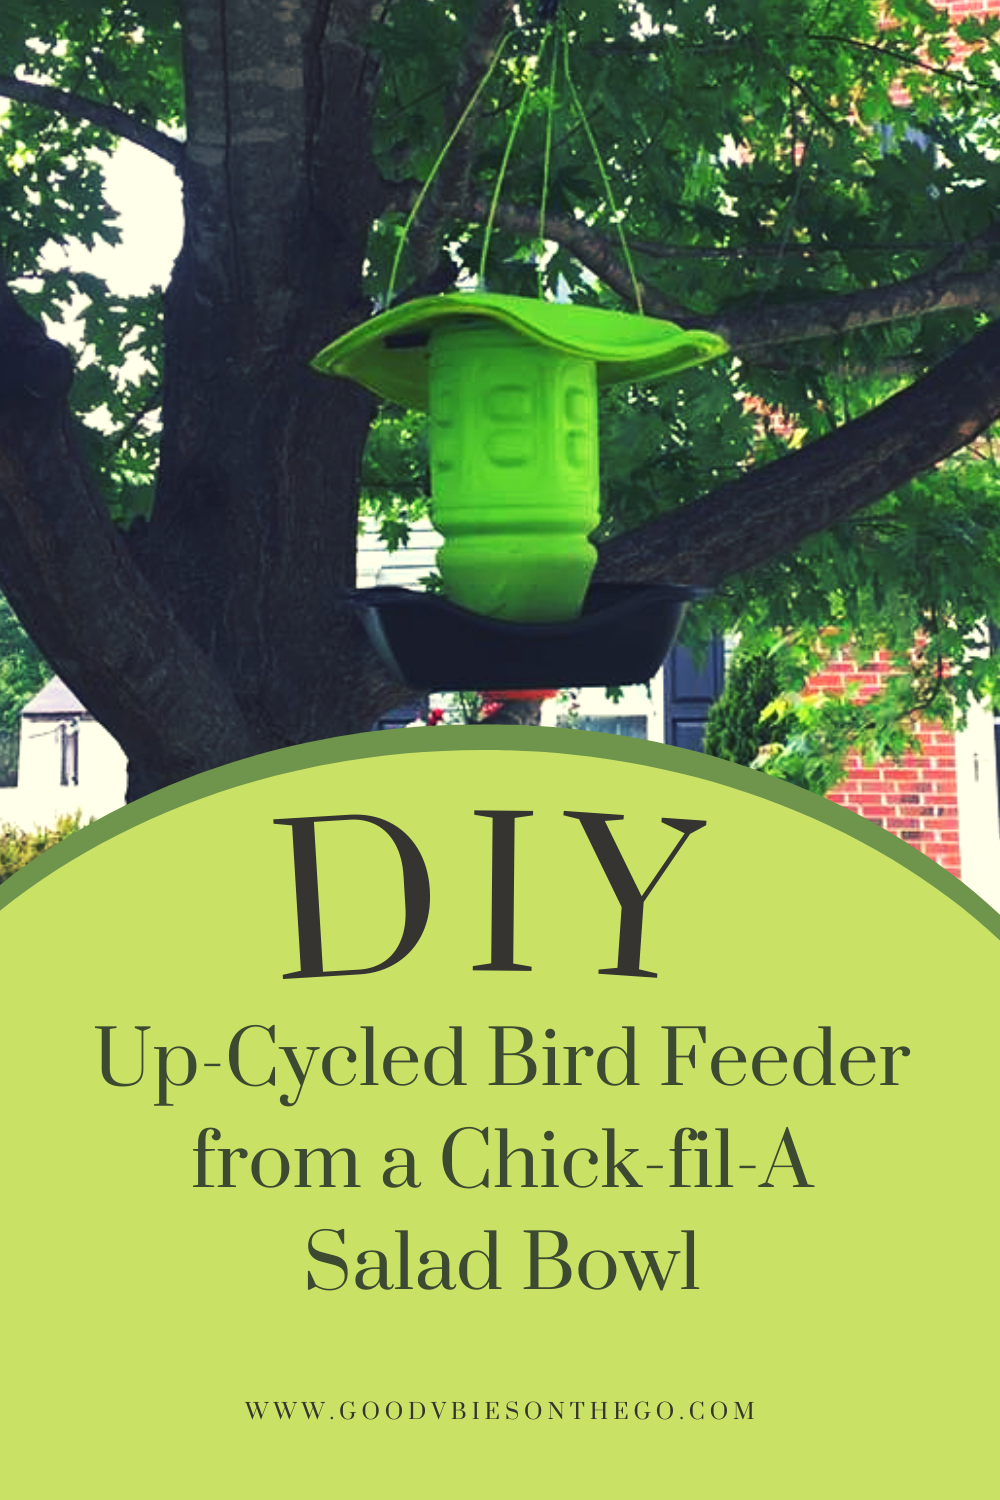 Up-Cycled Bird Feeder